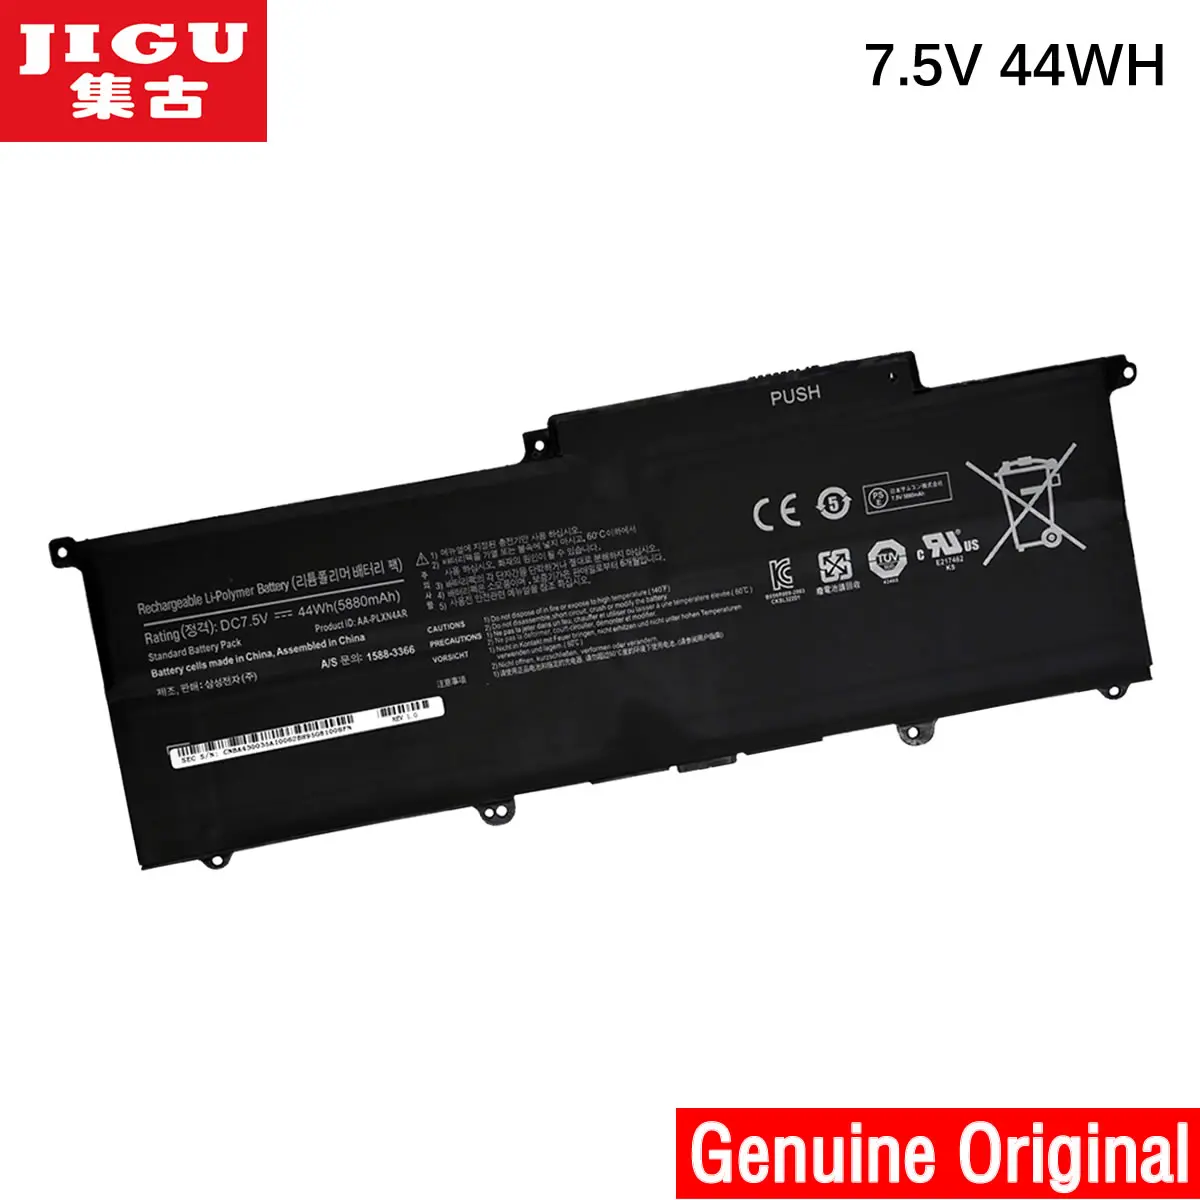 

JIGU AA-PLXN4AR Original Laptop Battery For SAMSUNG Ultrabook 900X3C 900X3D 900X3E NP900X3C NP900X3D NP900X3E 7.5V 44WH